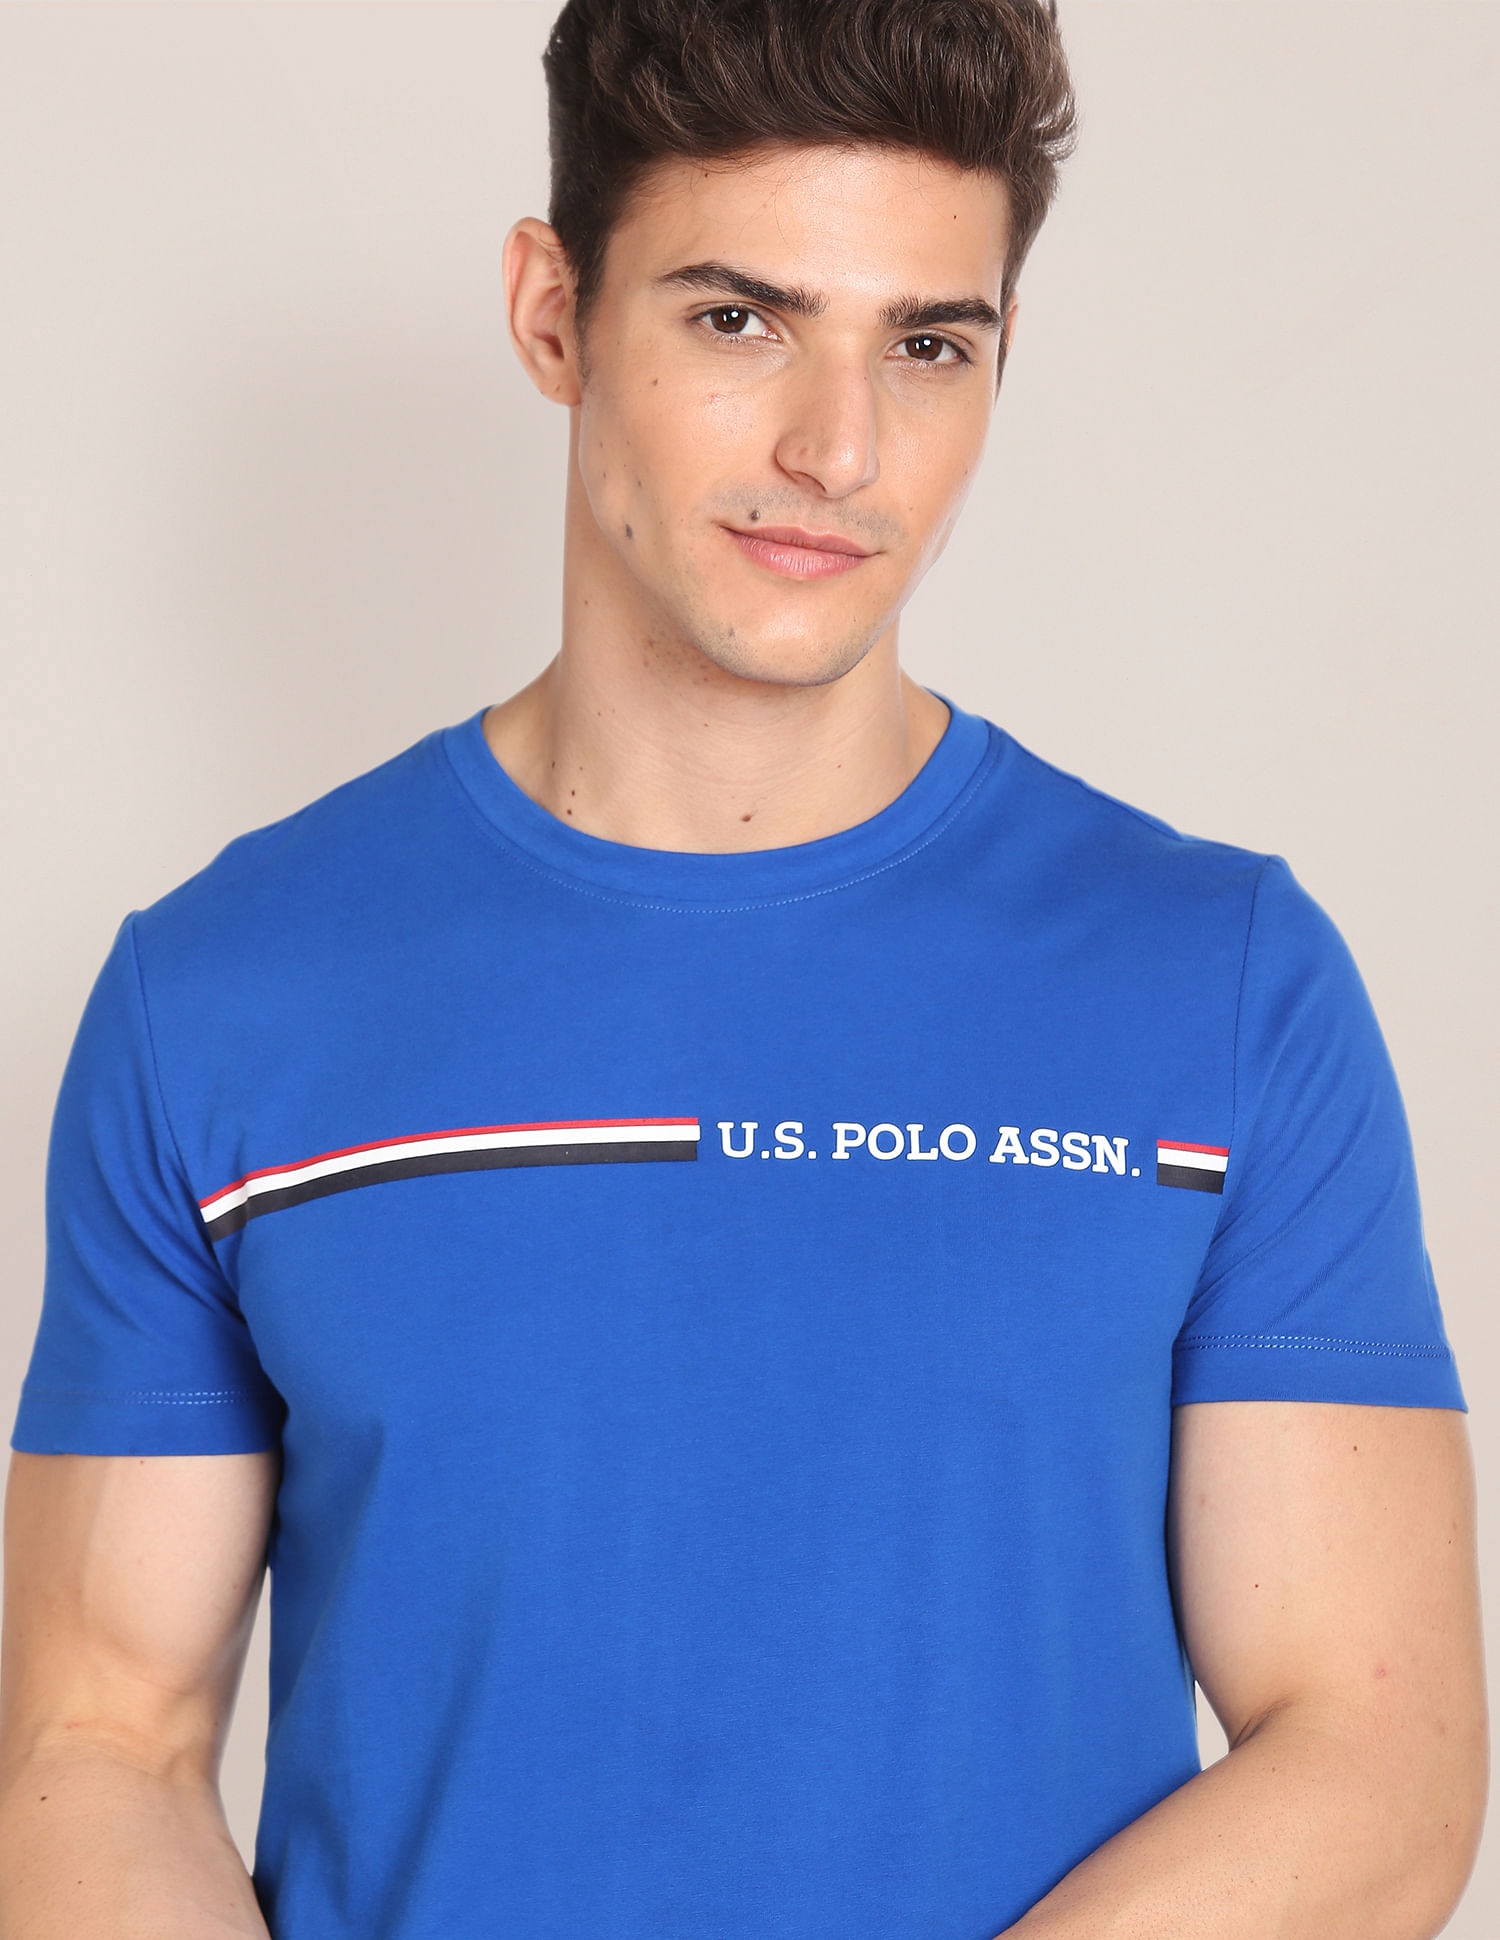 Buy U.S. POLO ASSN. Blue Printed Cotton Stretch Slim Fit Mens T-Shirt